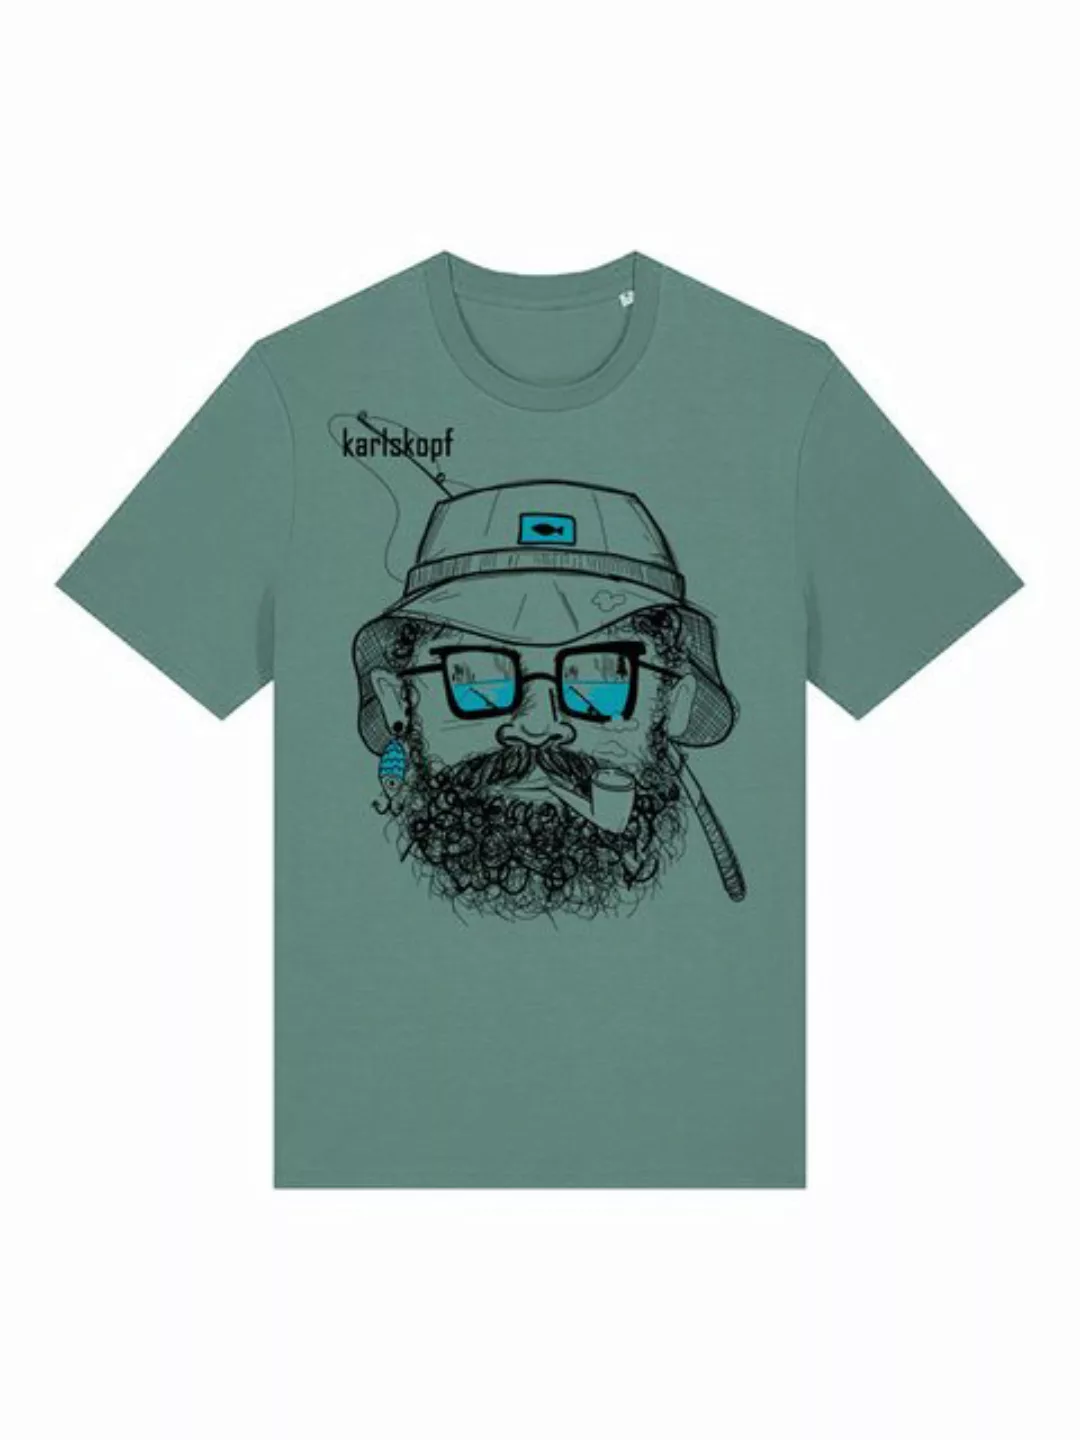 karlskopf Print-Shirt Rundhalsshirt Basic ANGLER günstig online kaufen